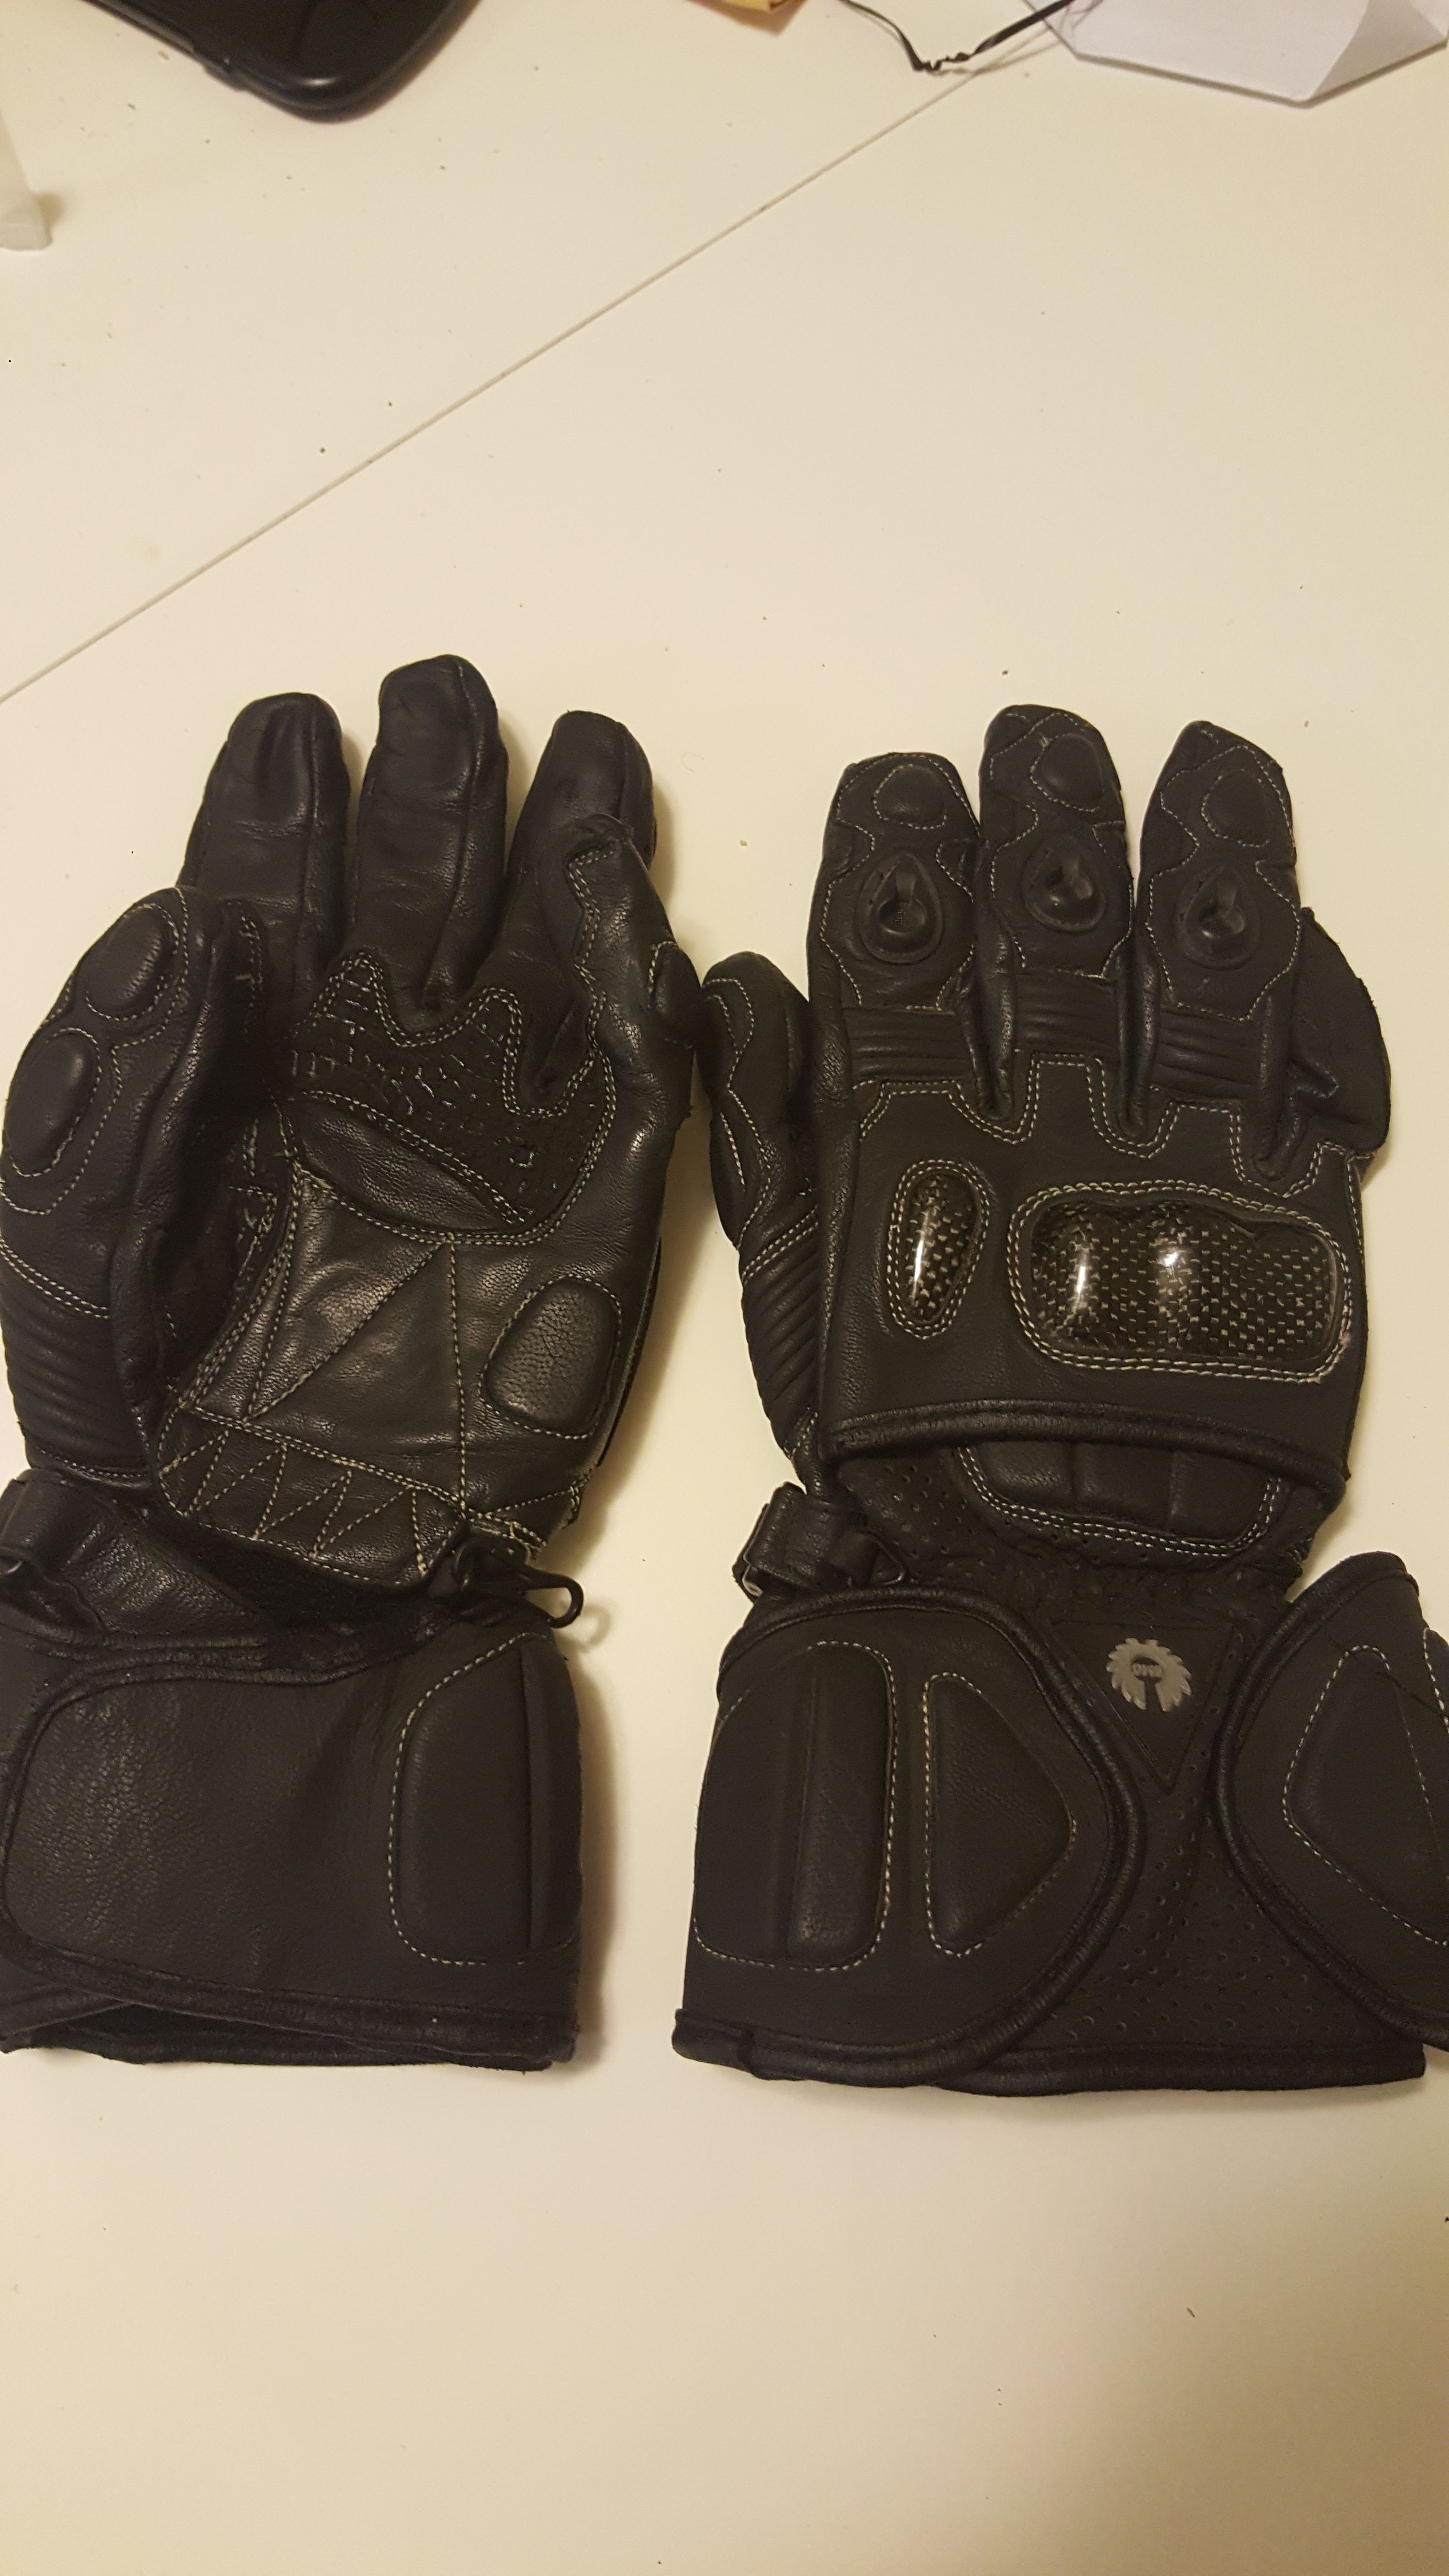 BMG Motorcycle glove